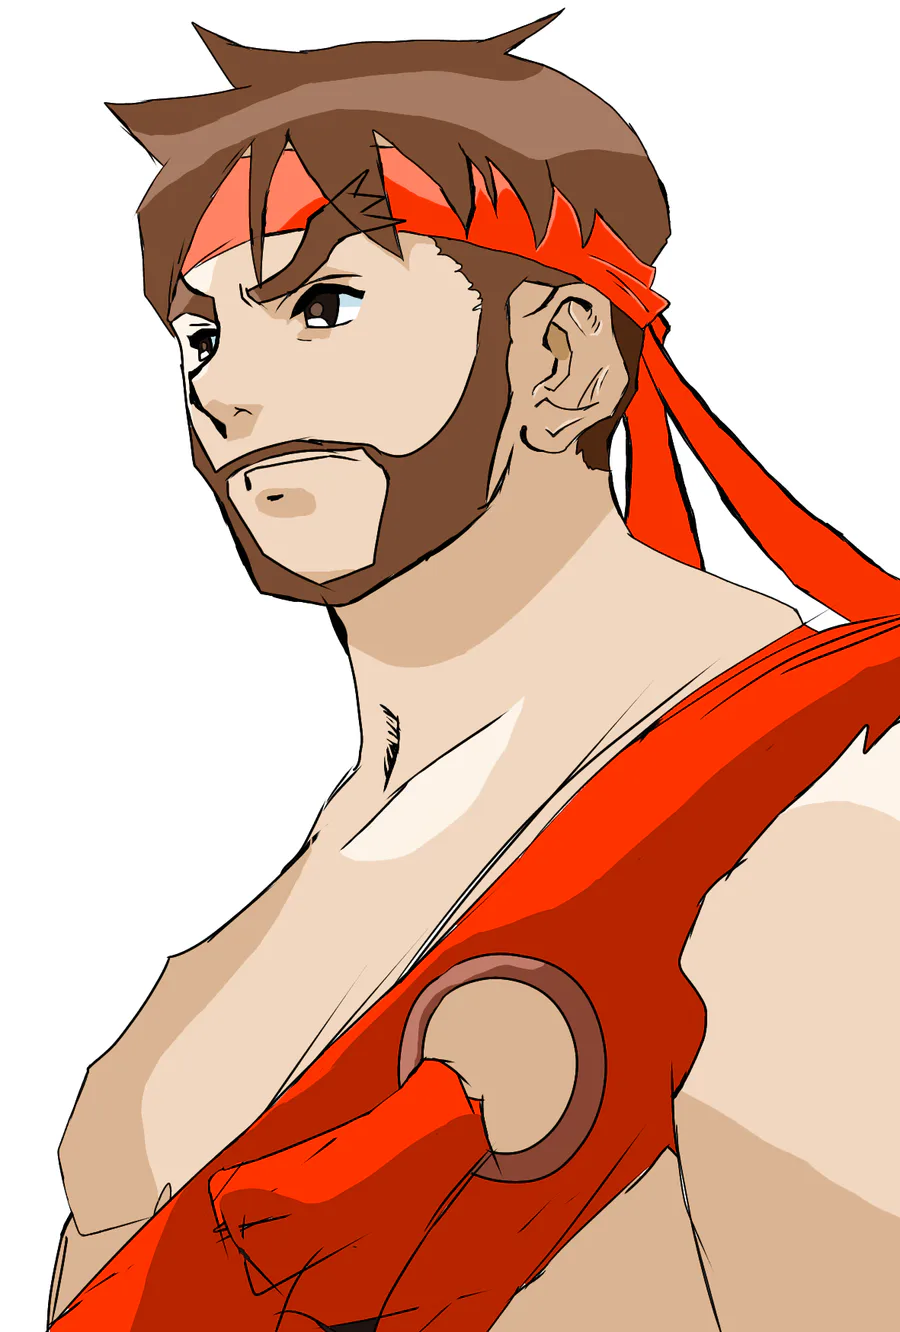 Ryu Art from Street Fighter Alpha 3 #art #artwork #gaming